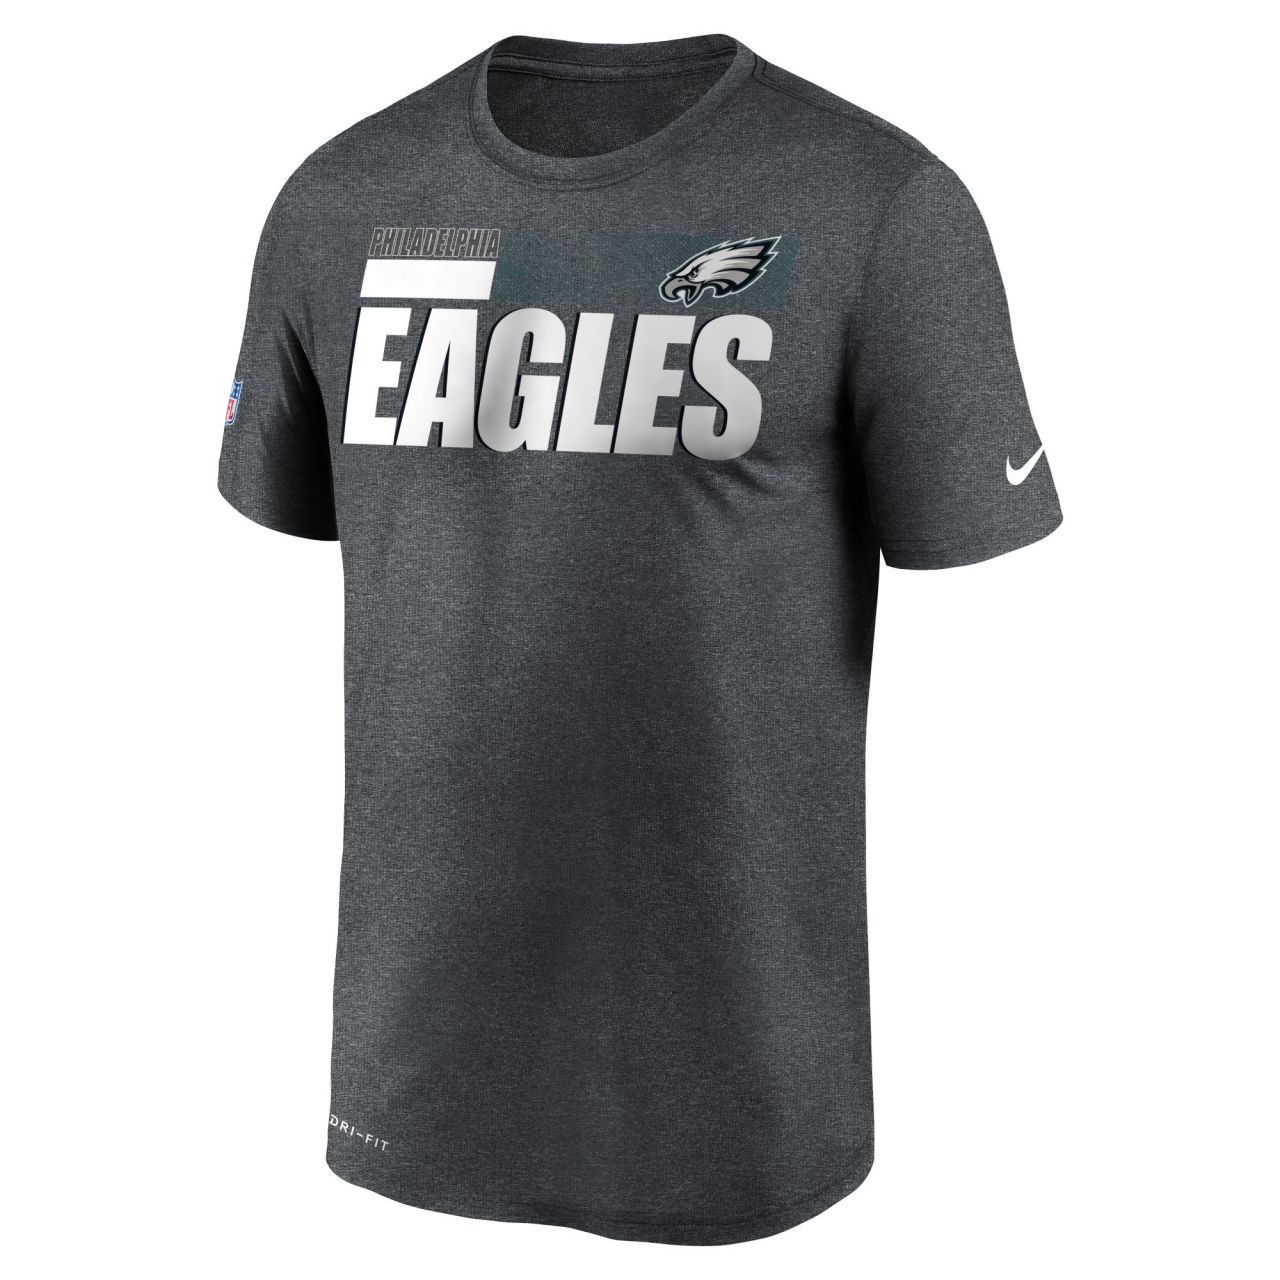 amfoo - Nike Dri-FIT Legend Shirt - SIDELINE Philadelphia Eagles